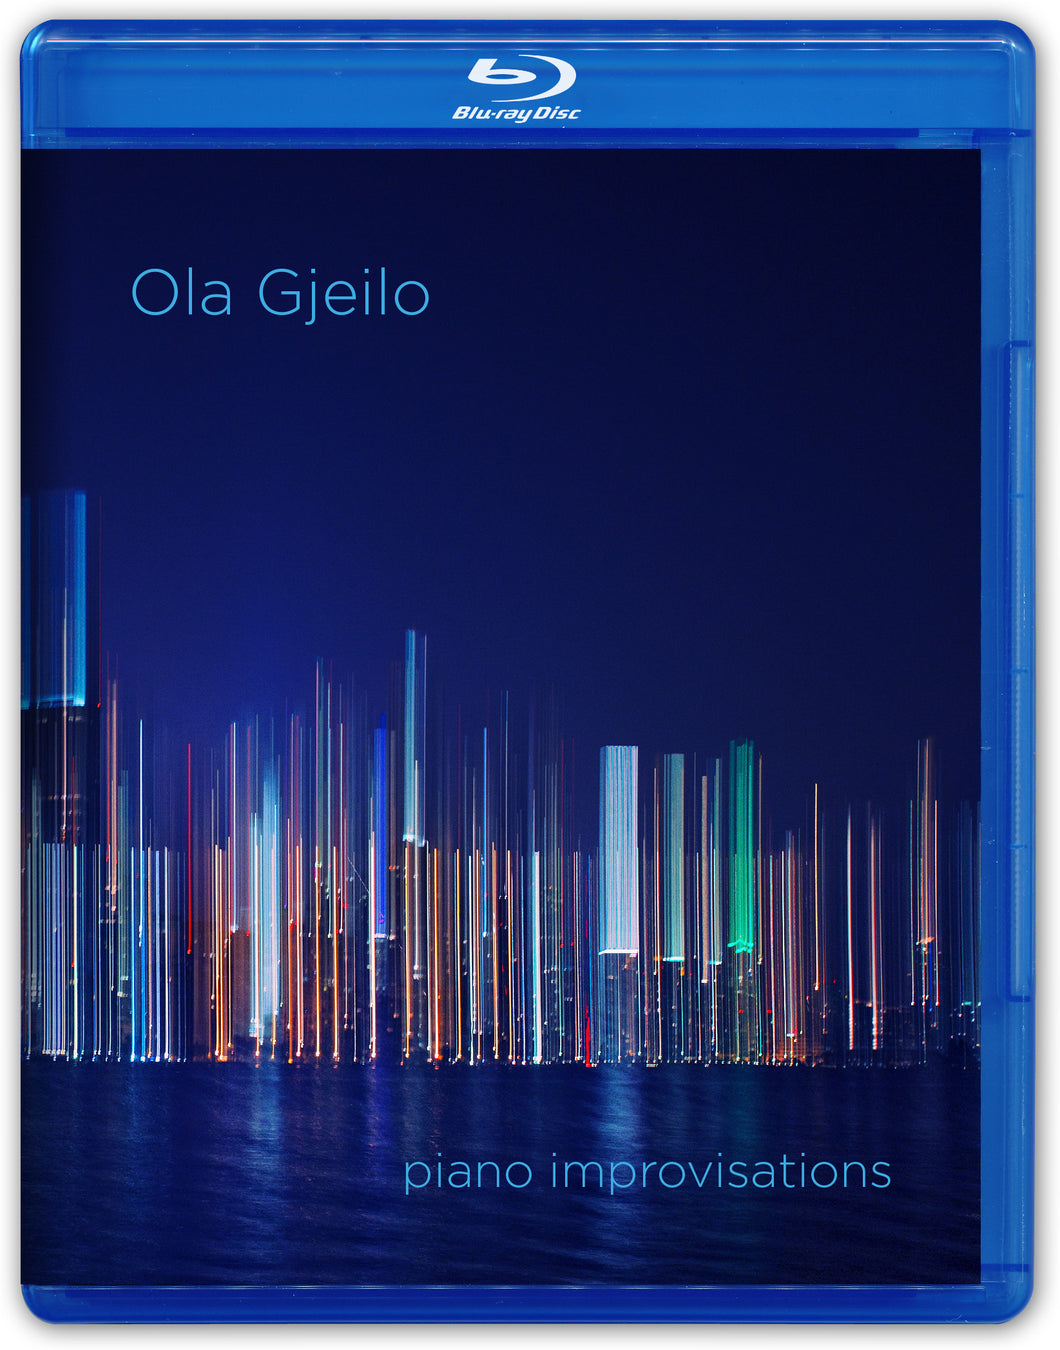 Piano Improvisations - Ola Gjeilo